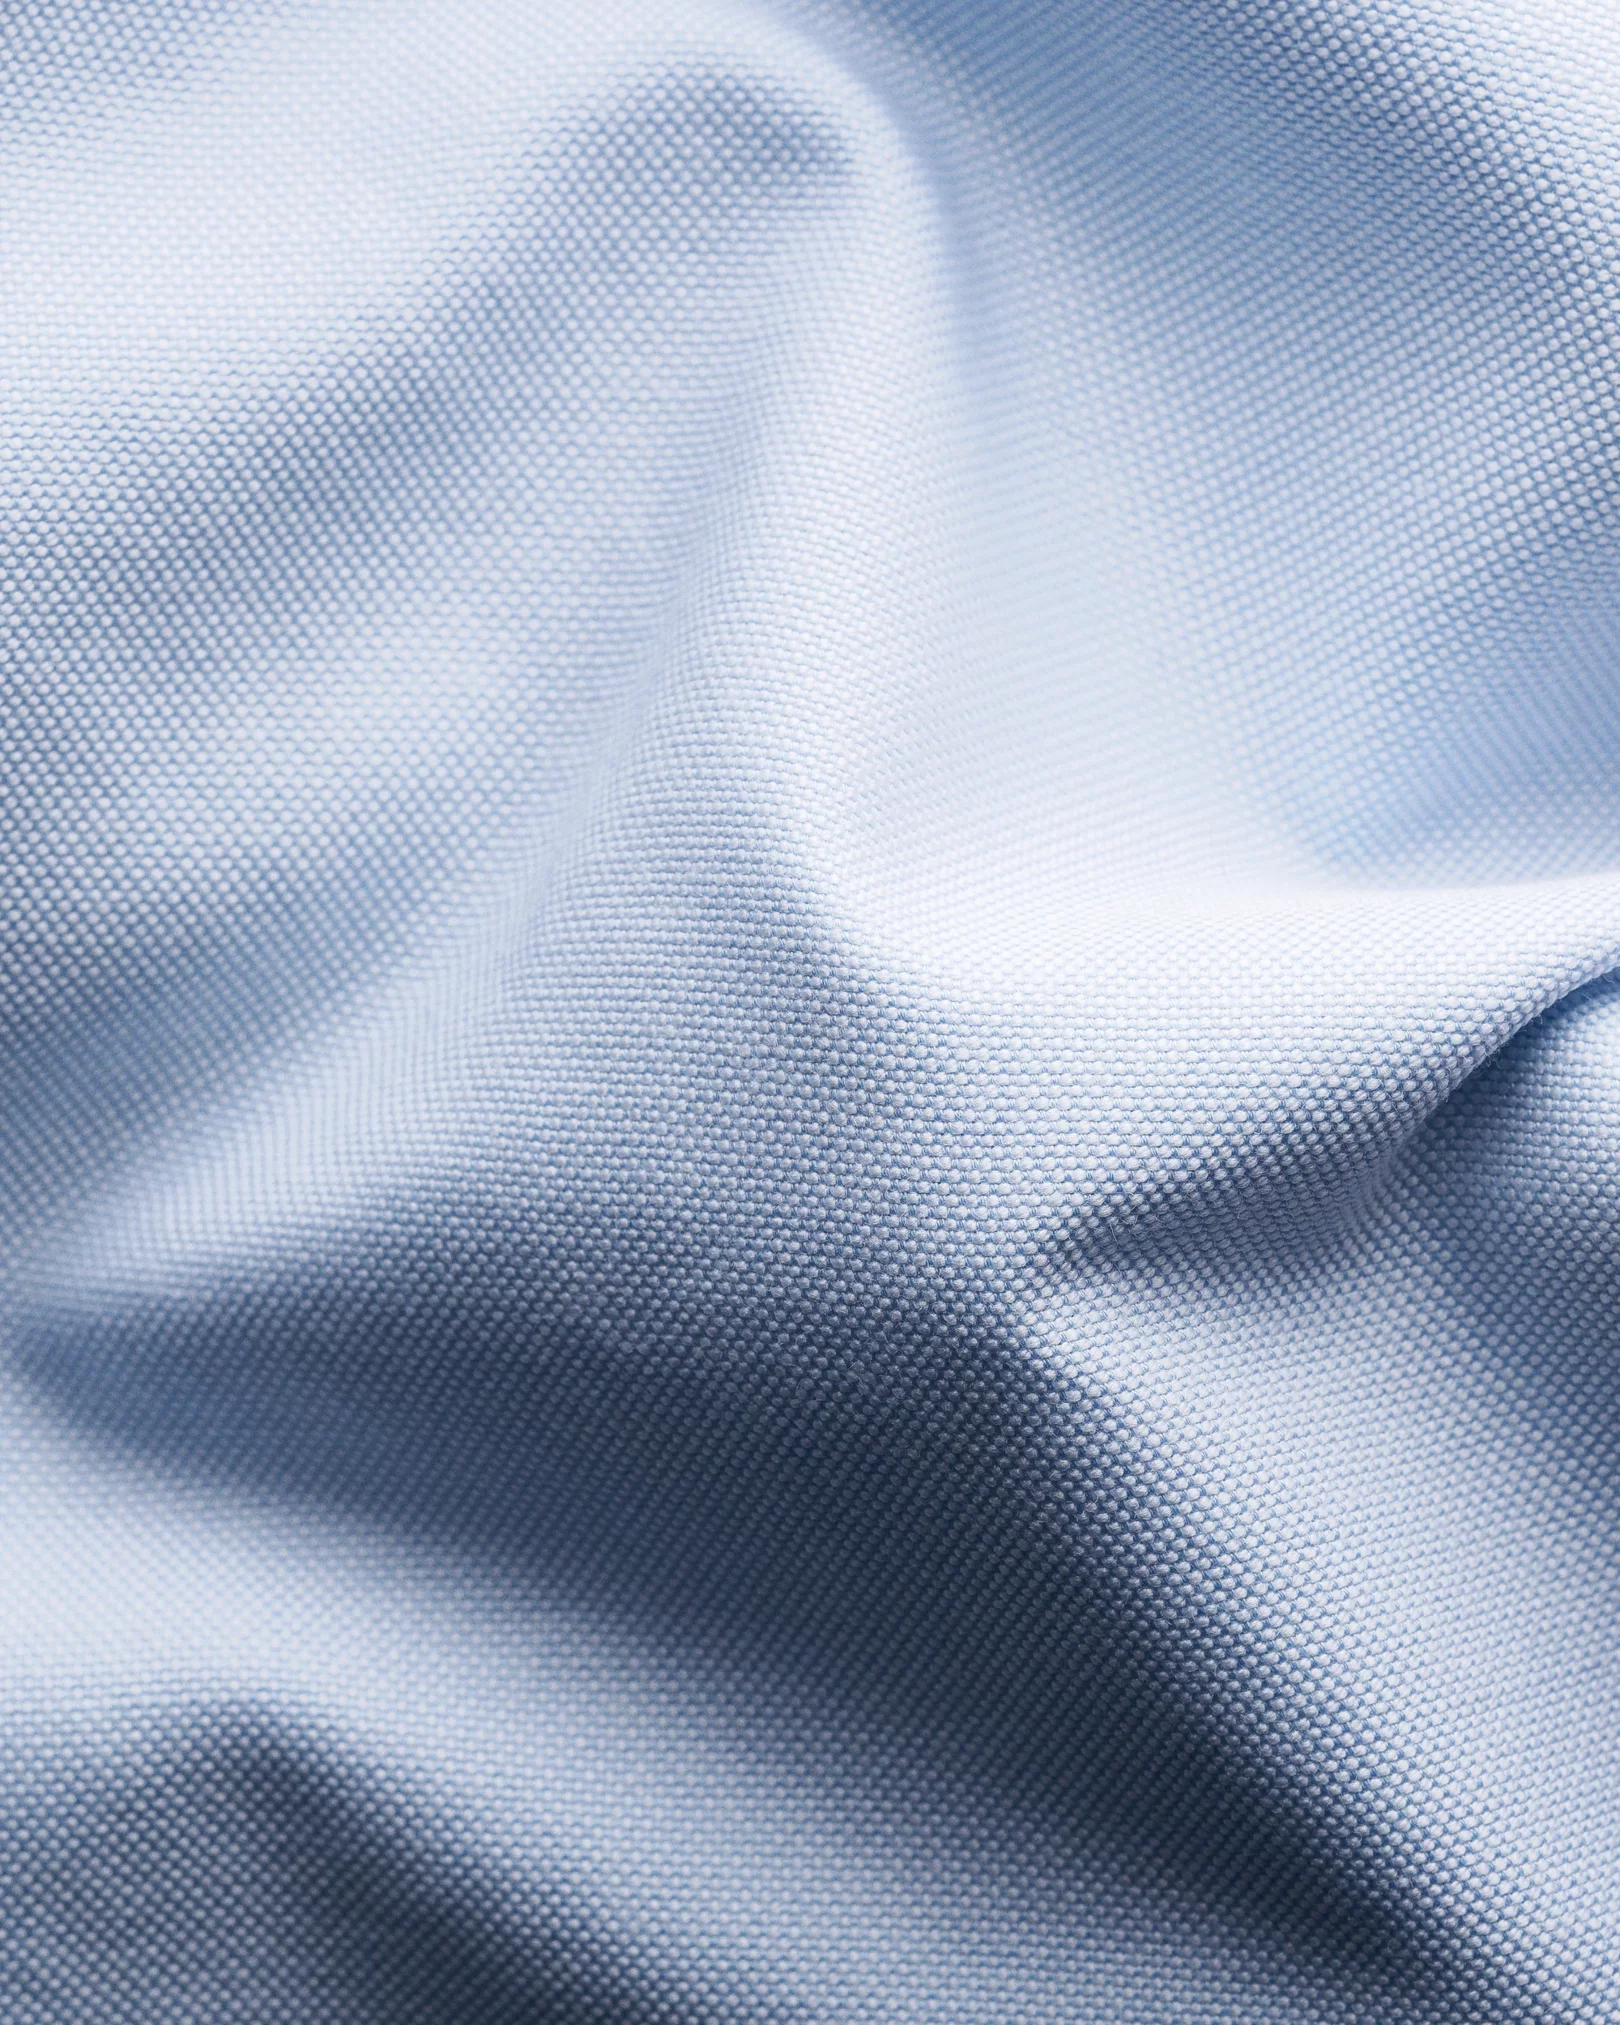 Eton - solid light blue oxford shirt